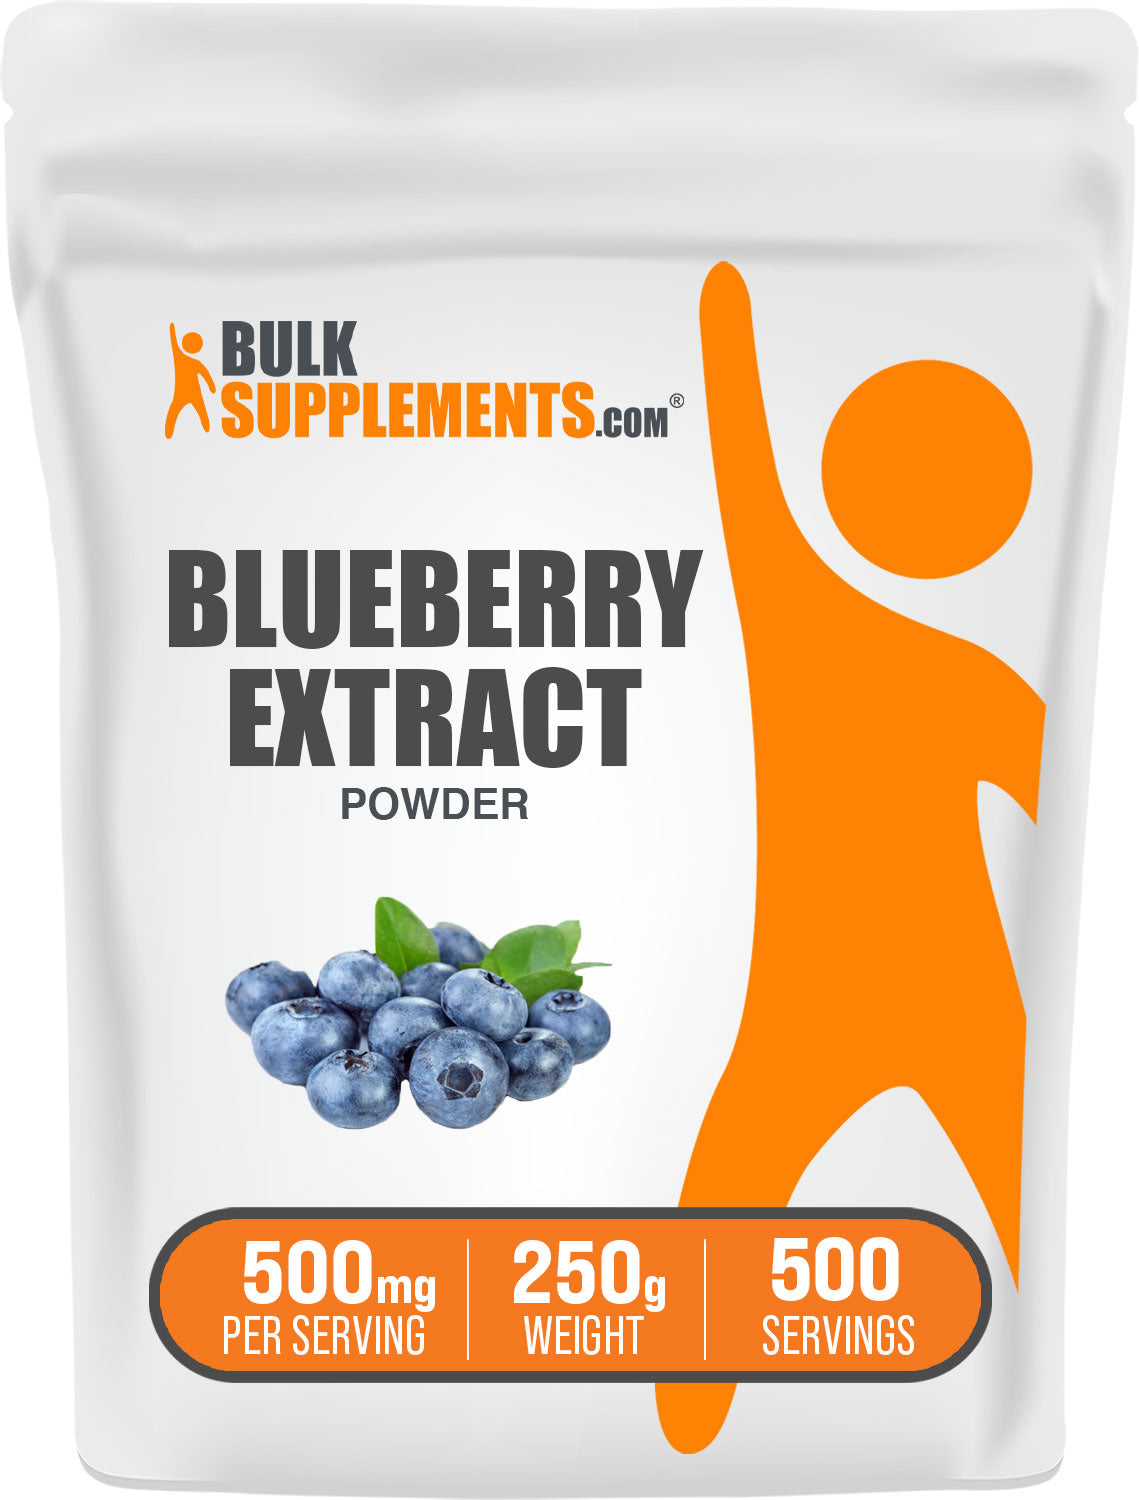 250g of blueberry powder